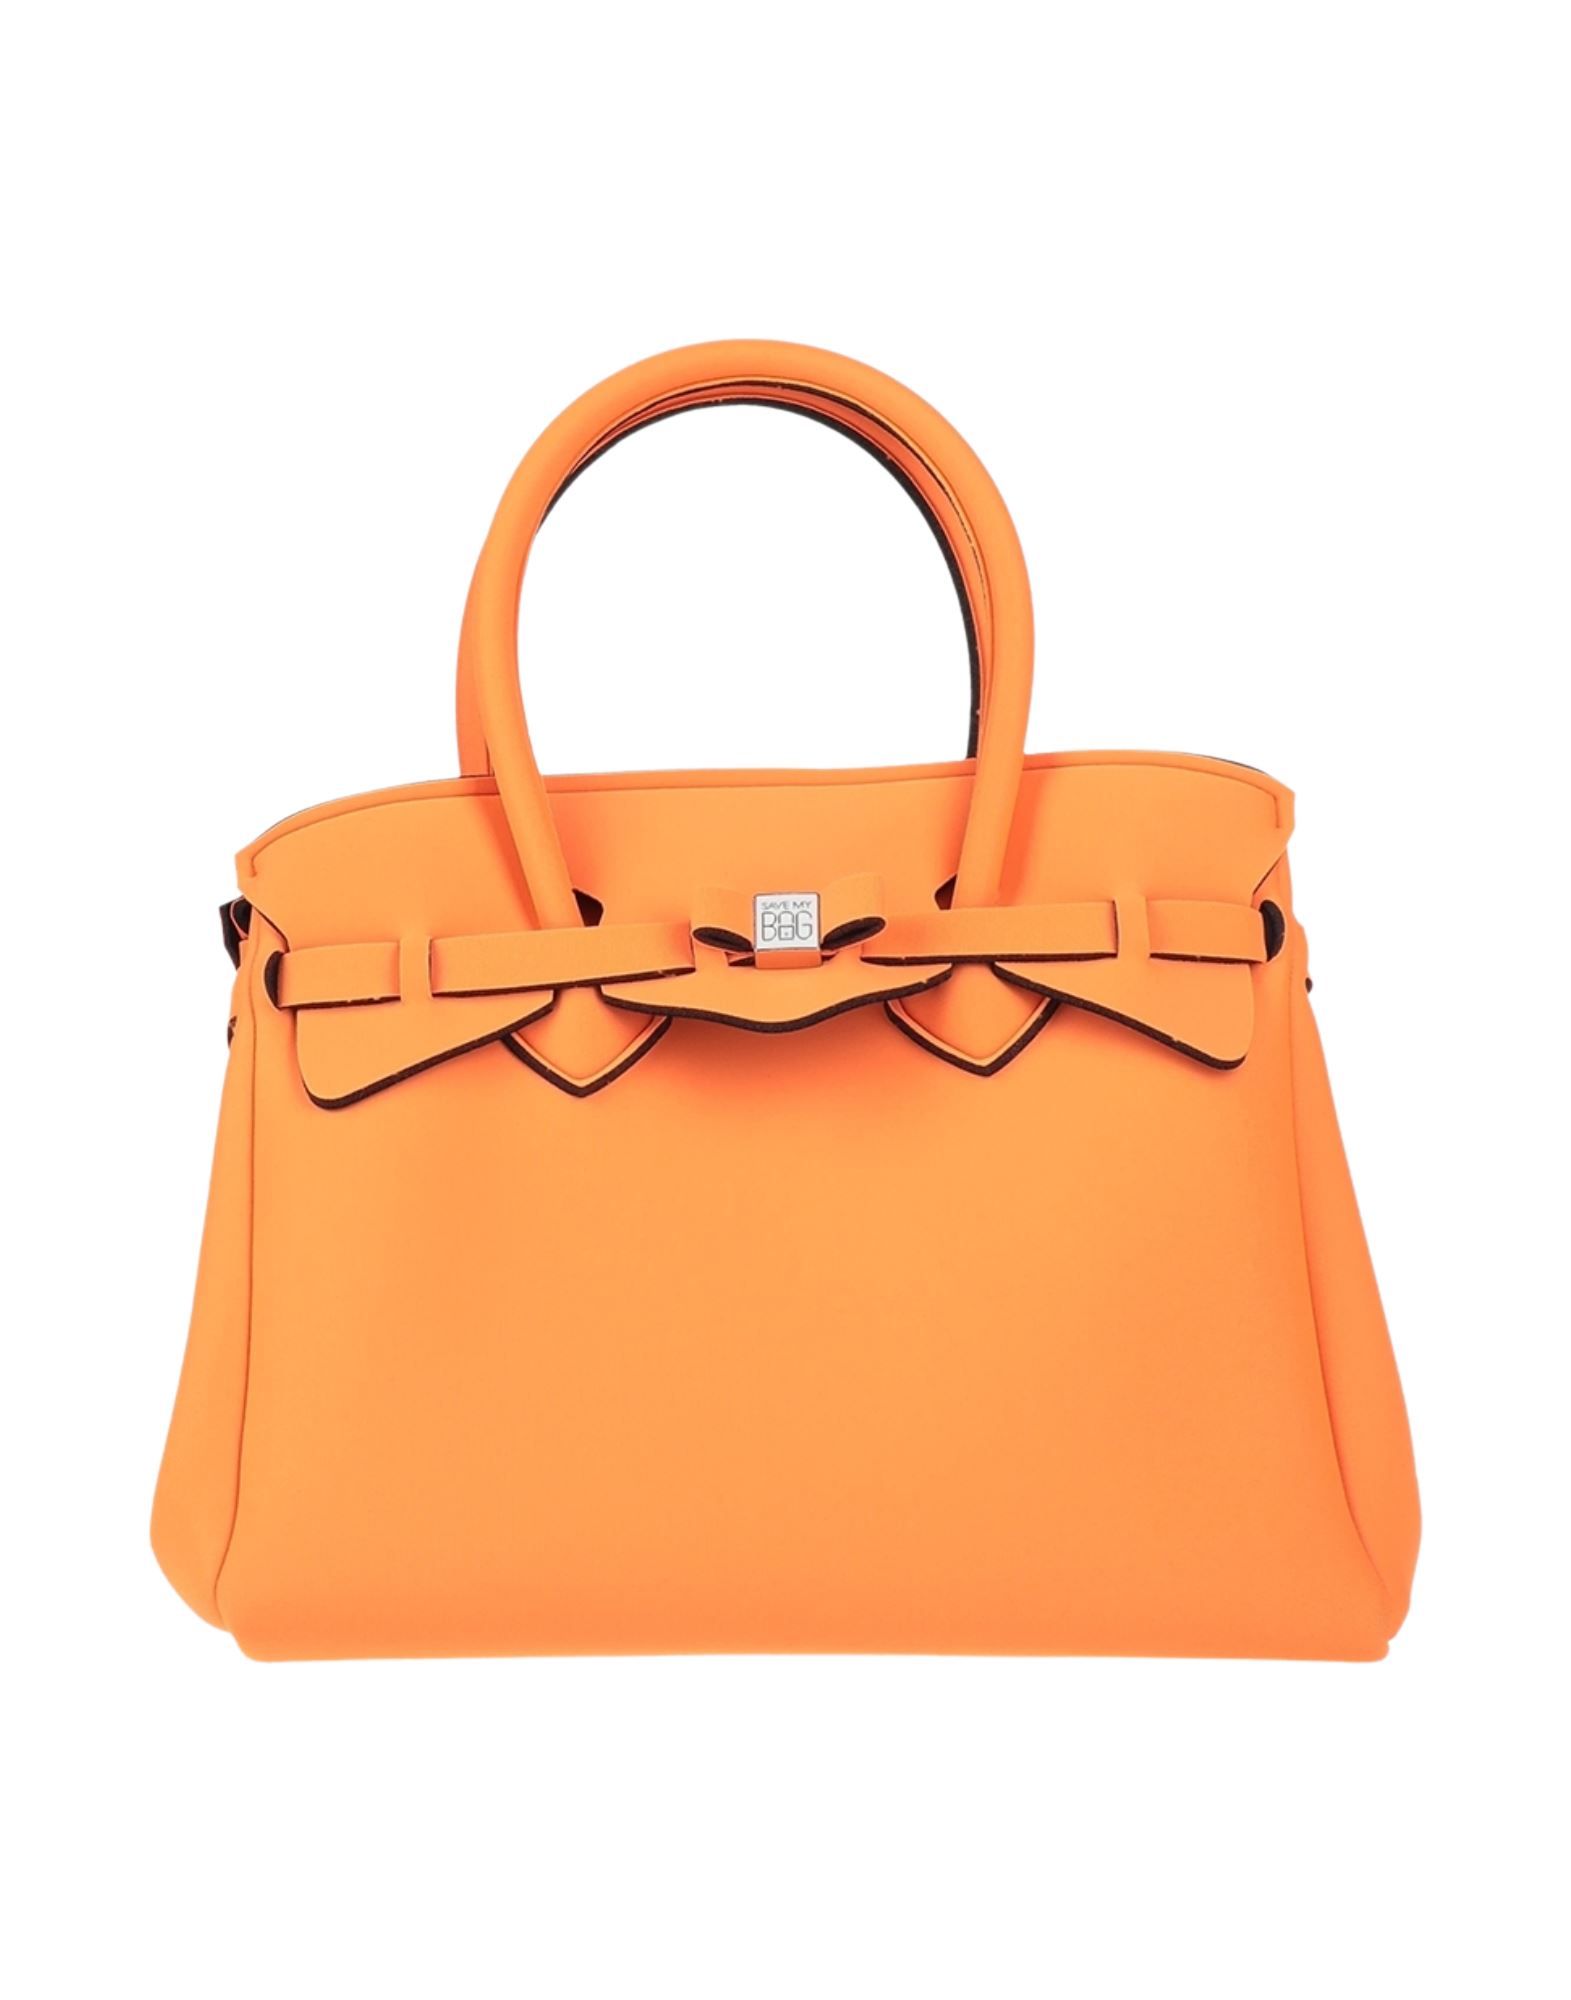 Save My Bag Handbags In Orange